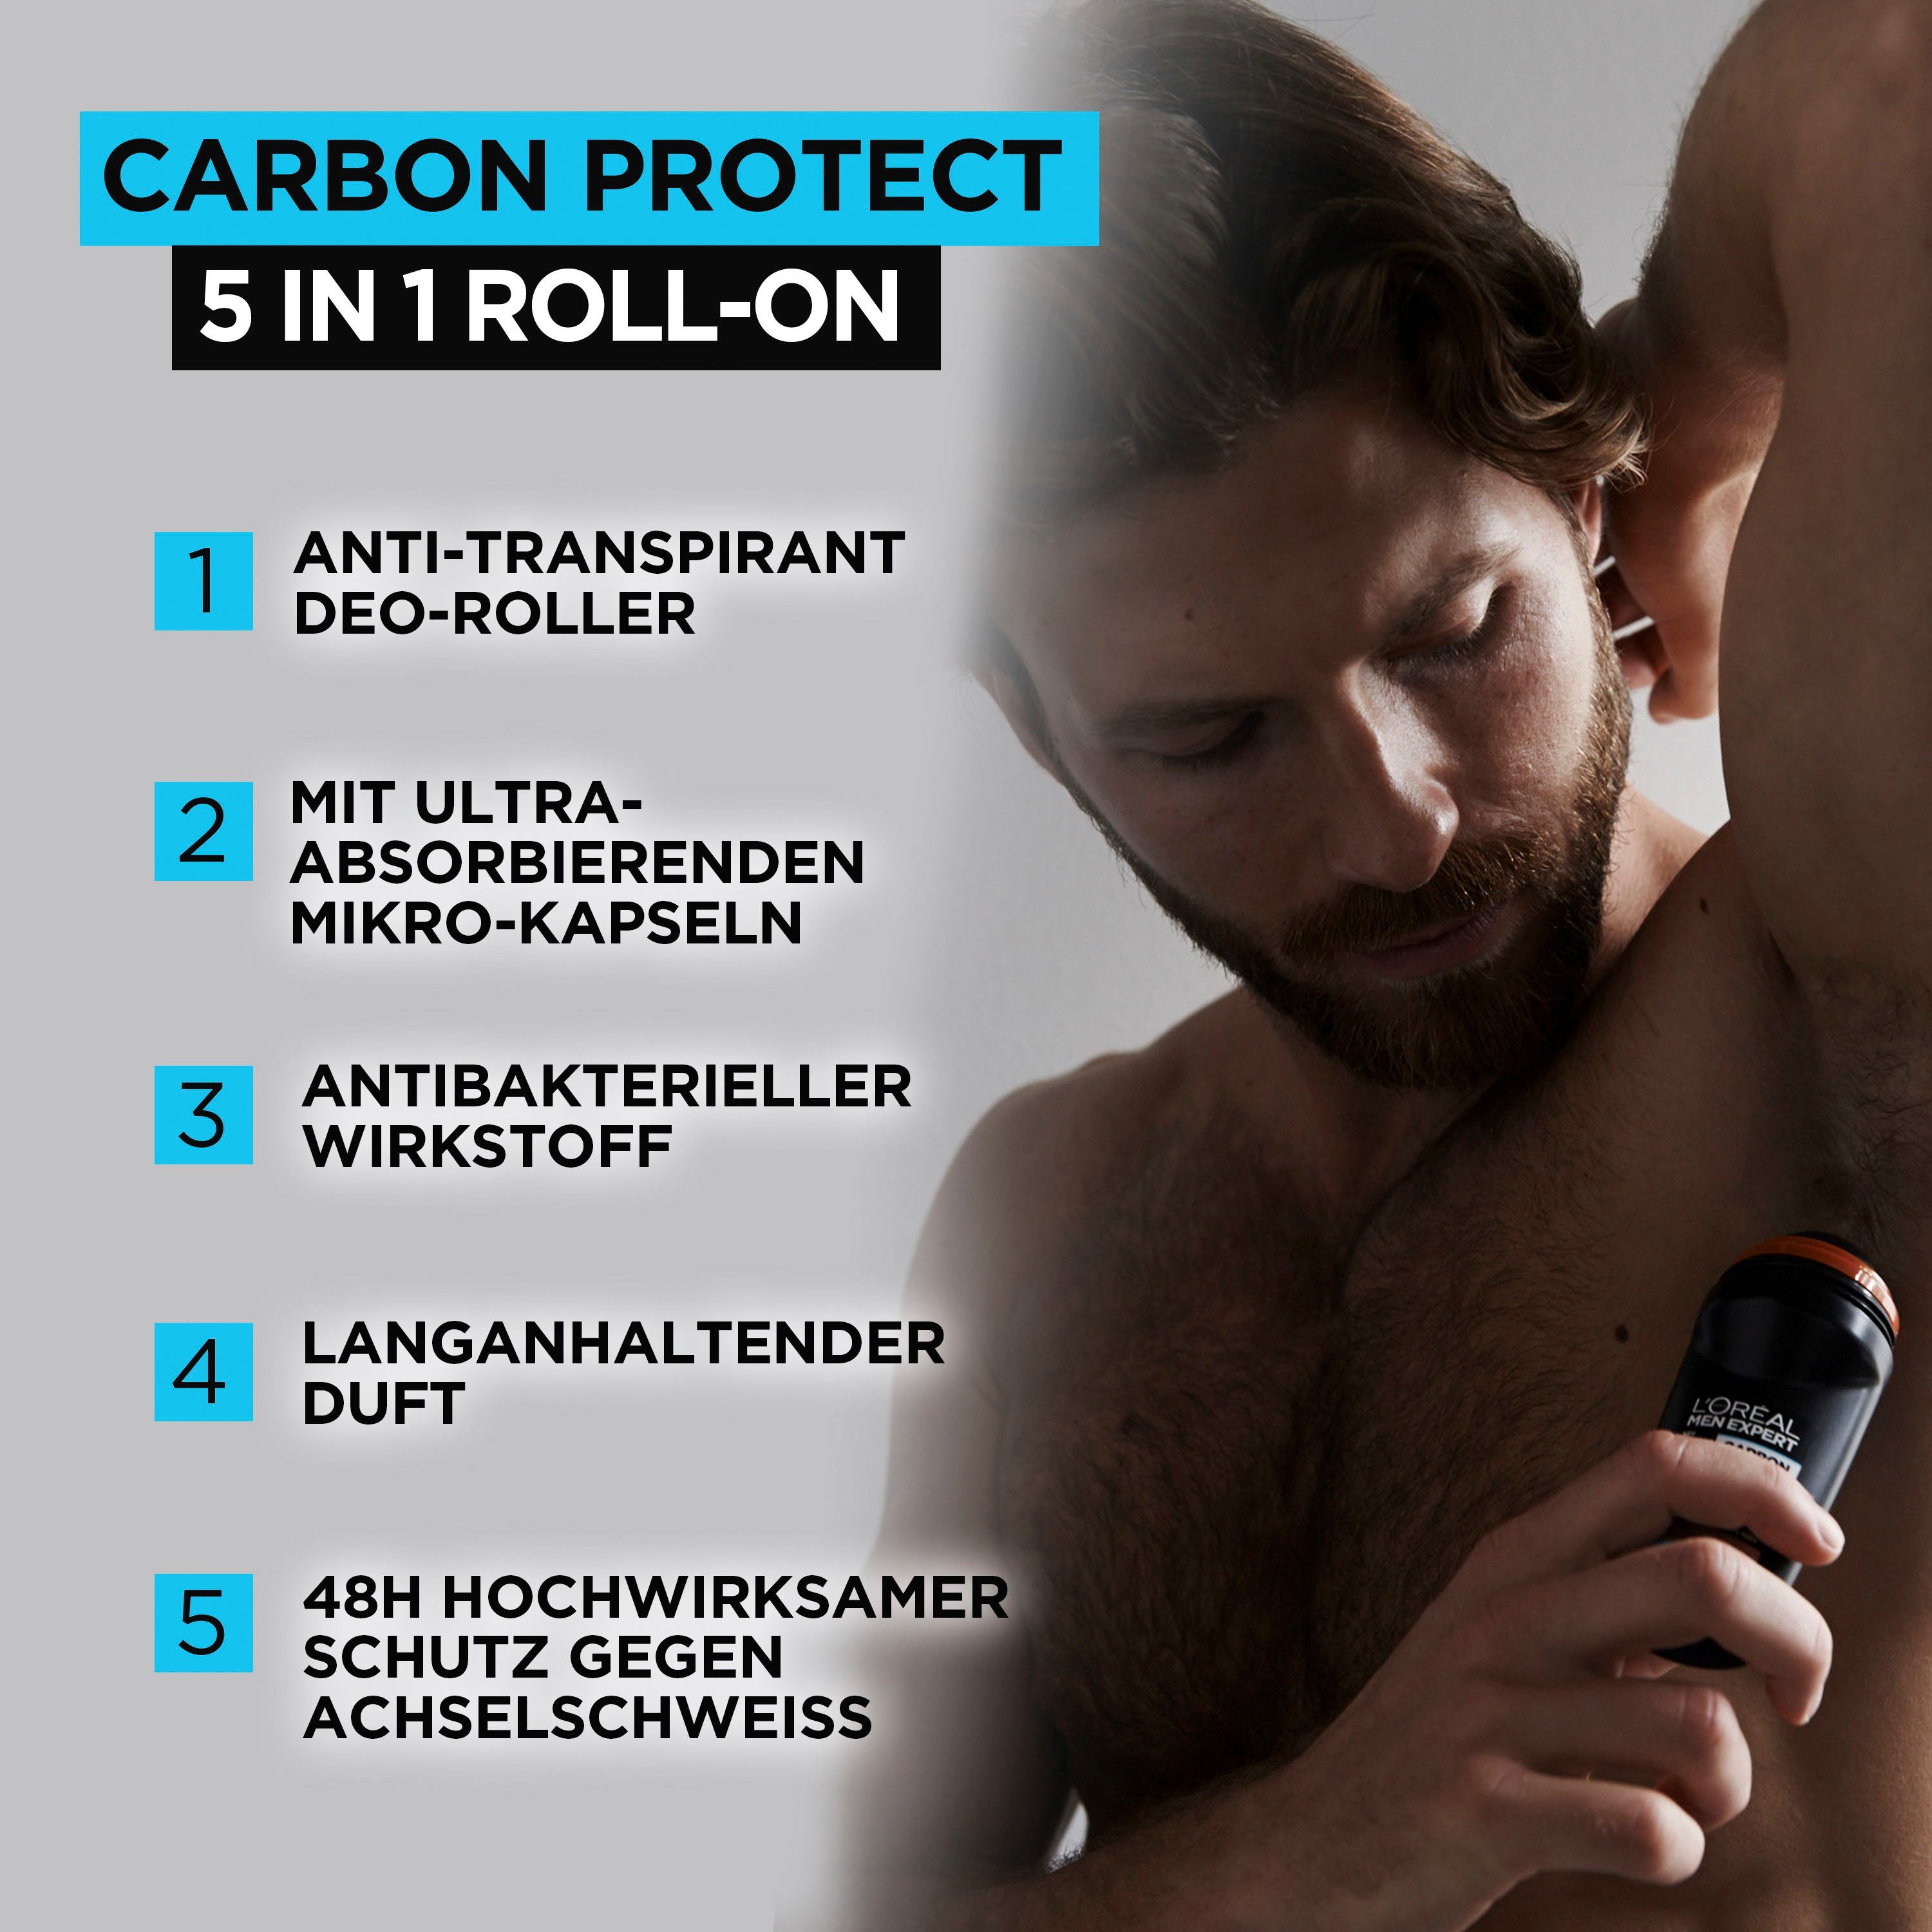 L'ORÉAL PARIS MEN Anti-Transpirant, Trockenschutz Protect mit Carbon EXPERT 48H Deo-Roller